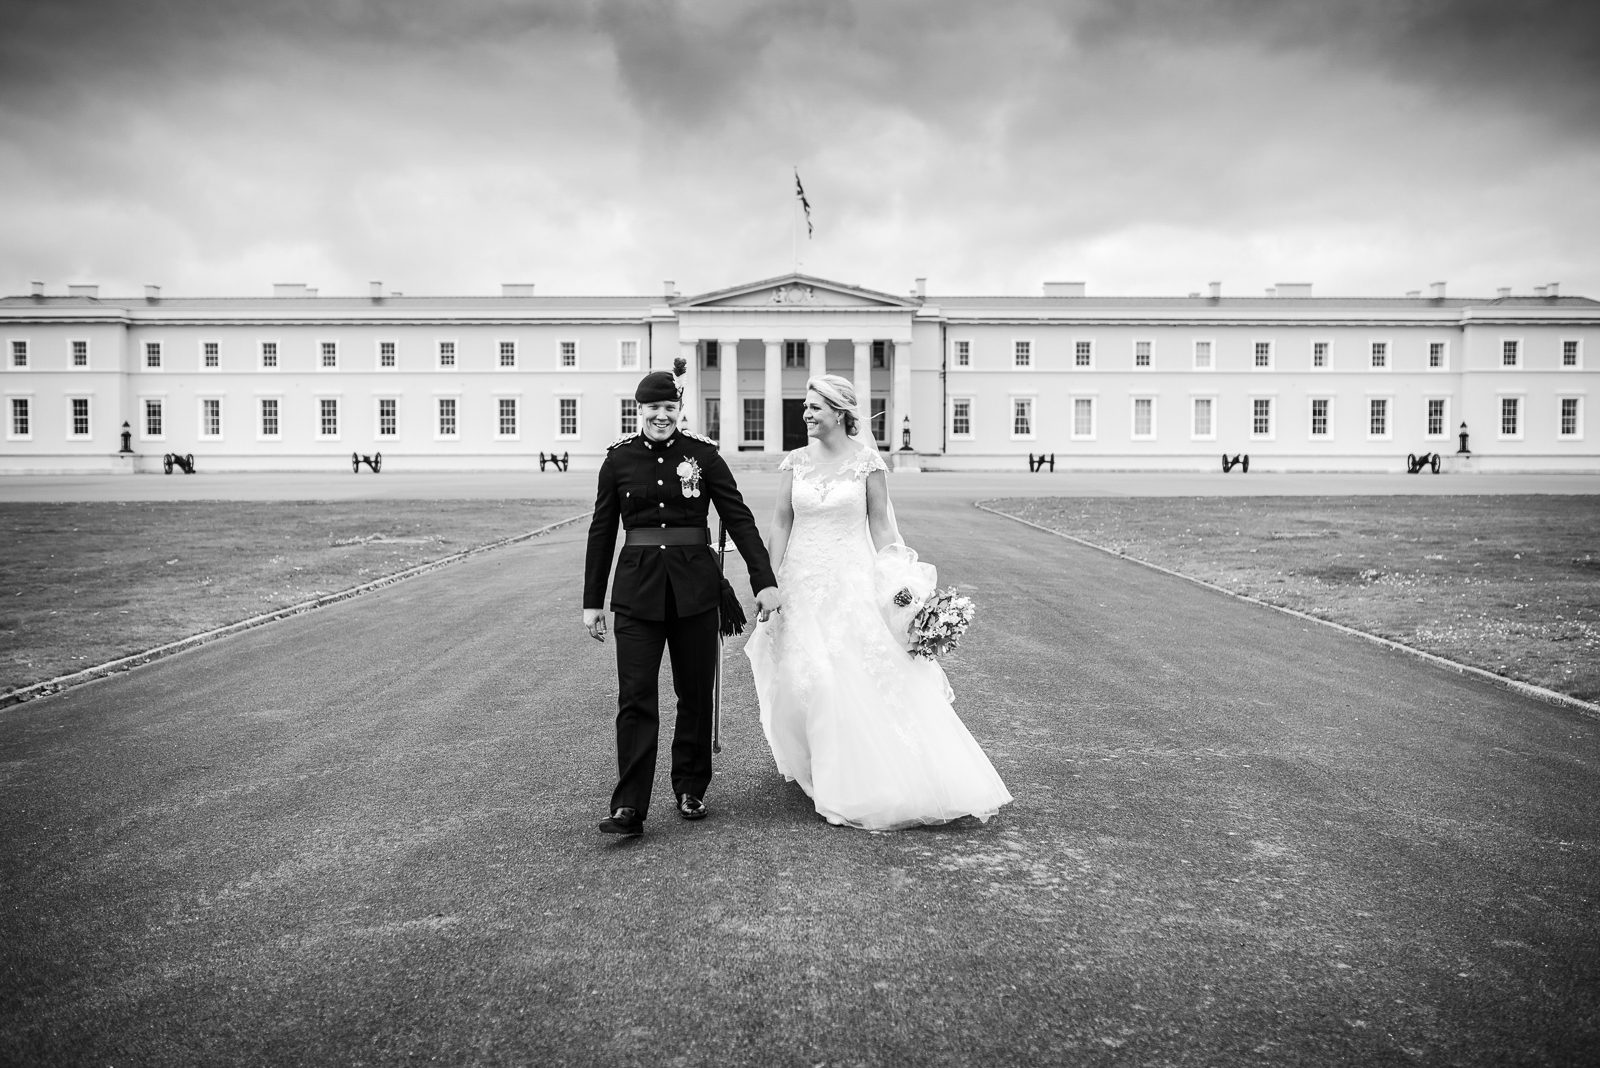 RMAS black and white documentary wedding photography.